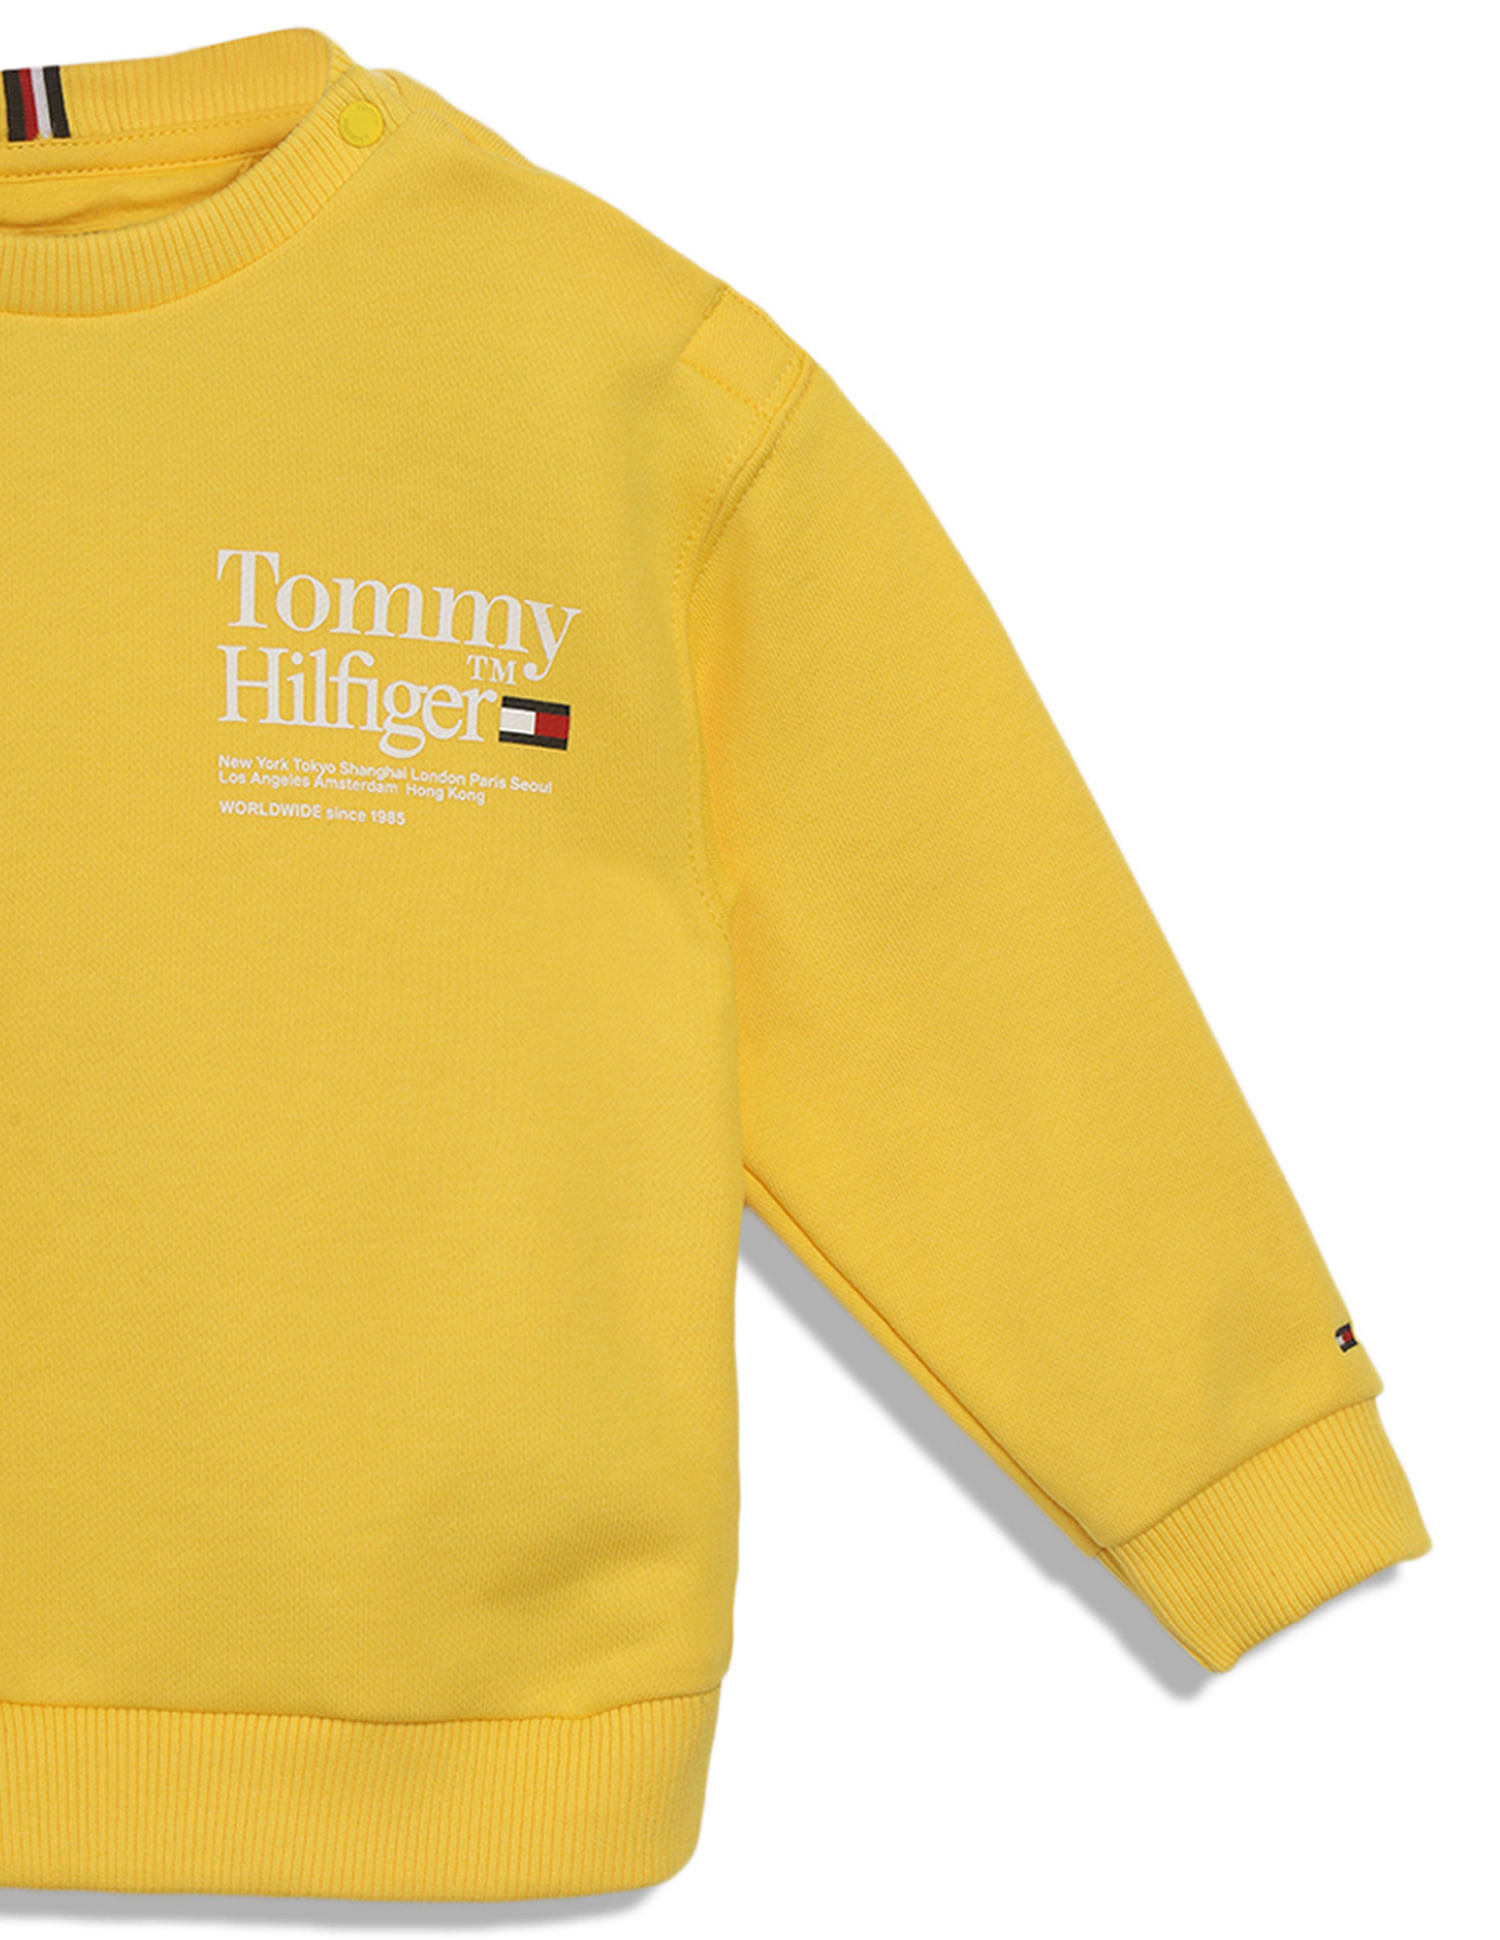 Hilfiger Transitional Buy Boys Tommy Cotton Kids Sweatshirt Solid